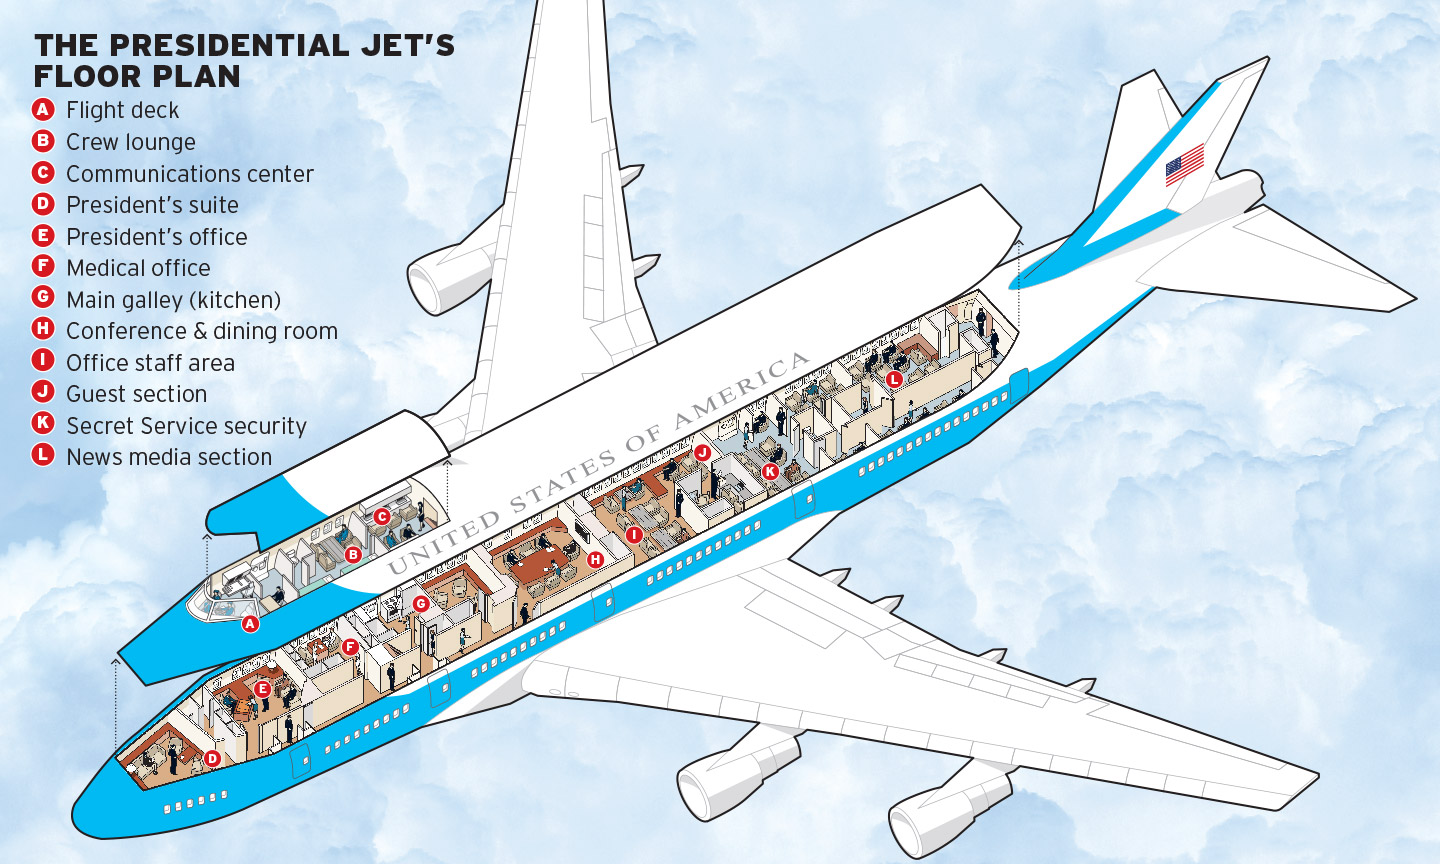 The President's Jet